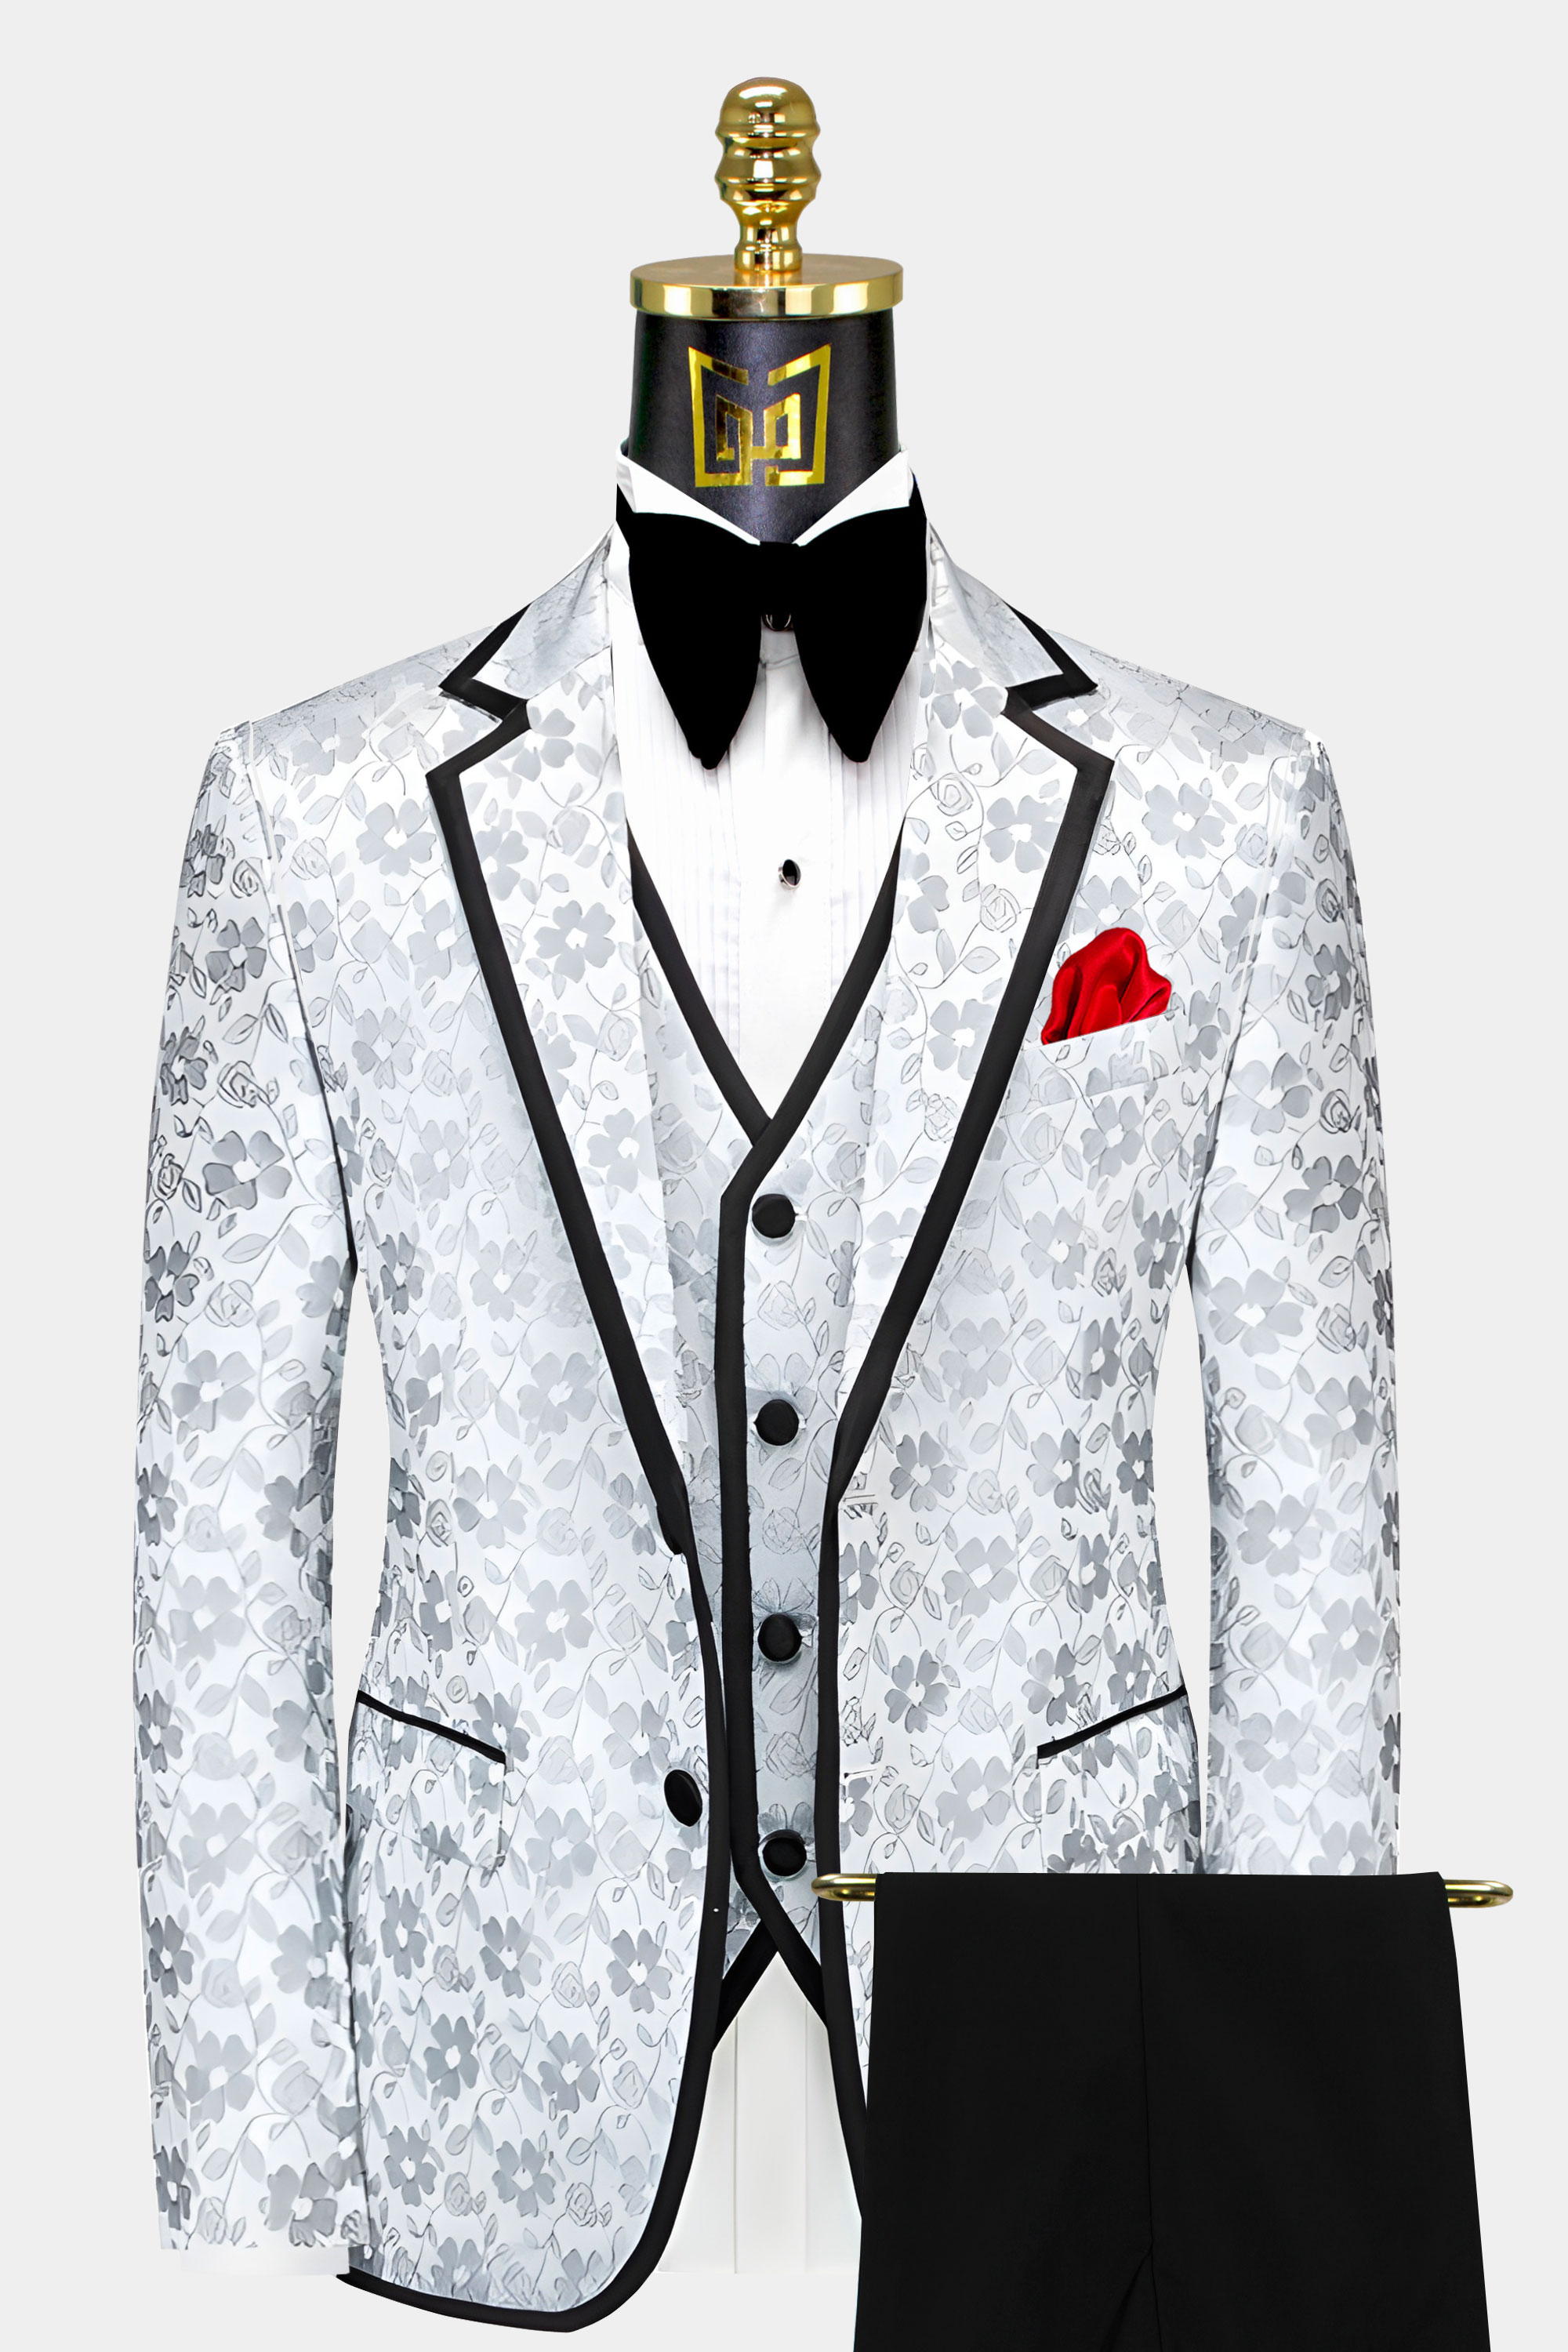 Silver Tuxedo with Black Trim | Gentleman's Guru